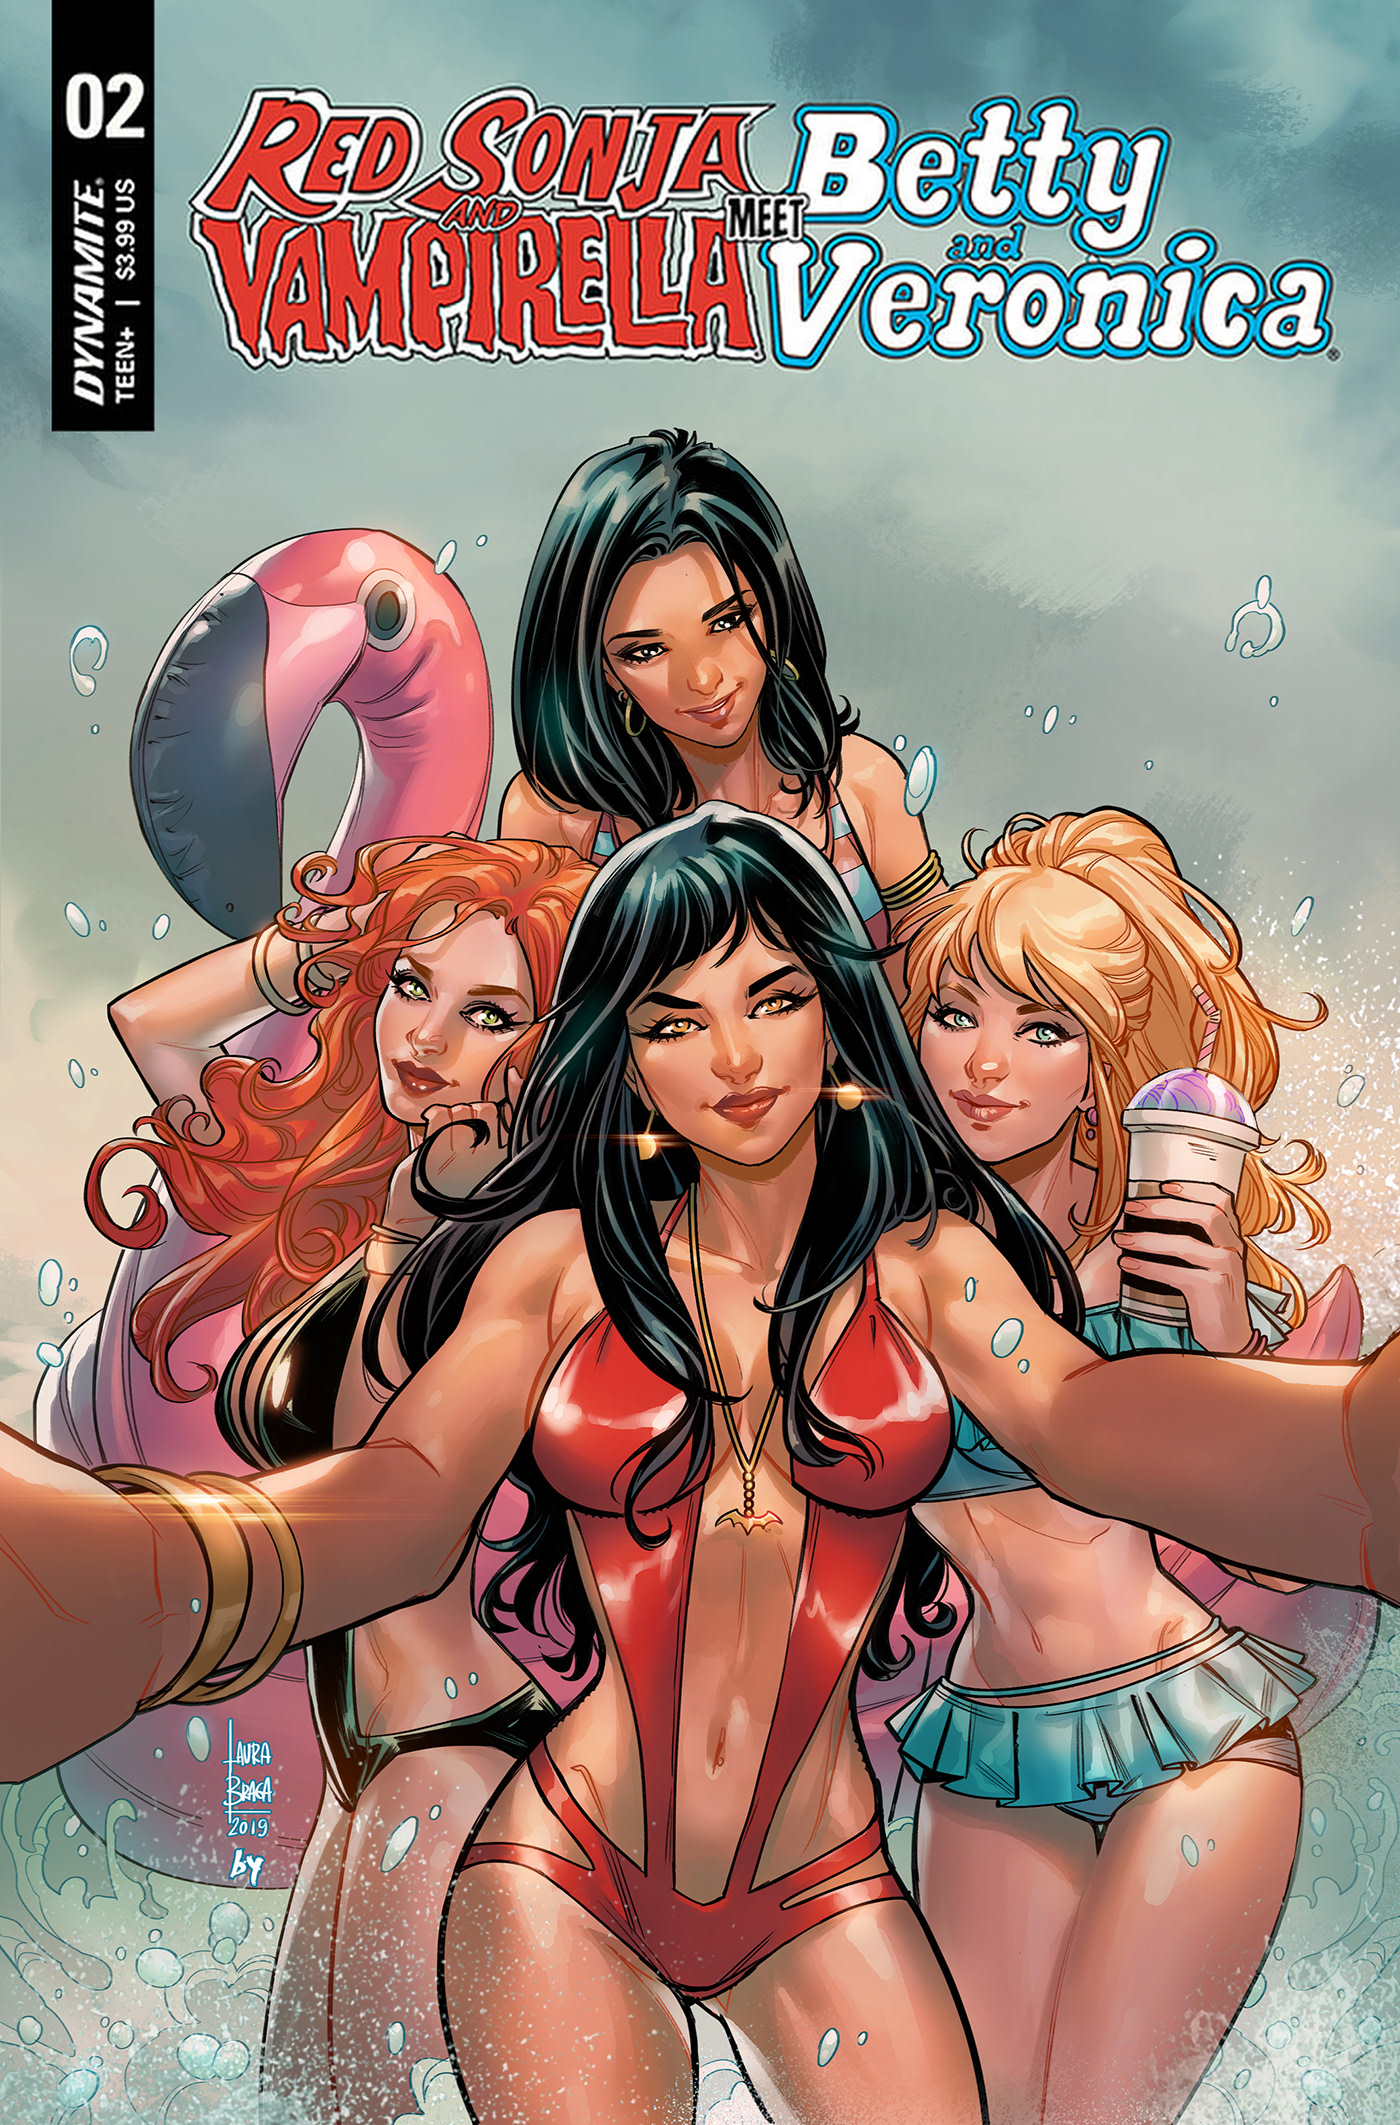 bikini selfie comic colorist beach party woman girls dynamite Comic Book Cover Art flamingo